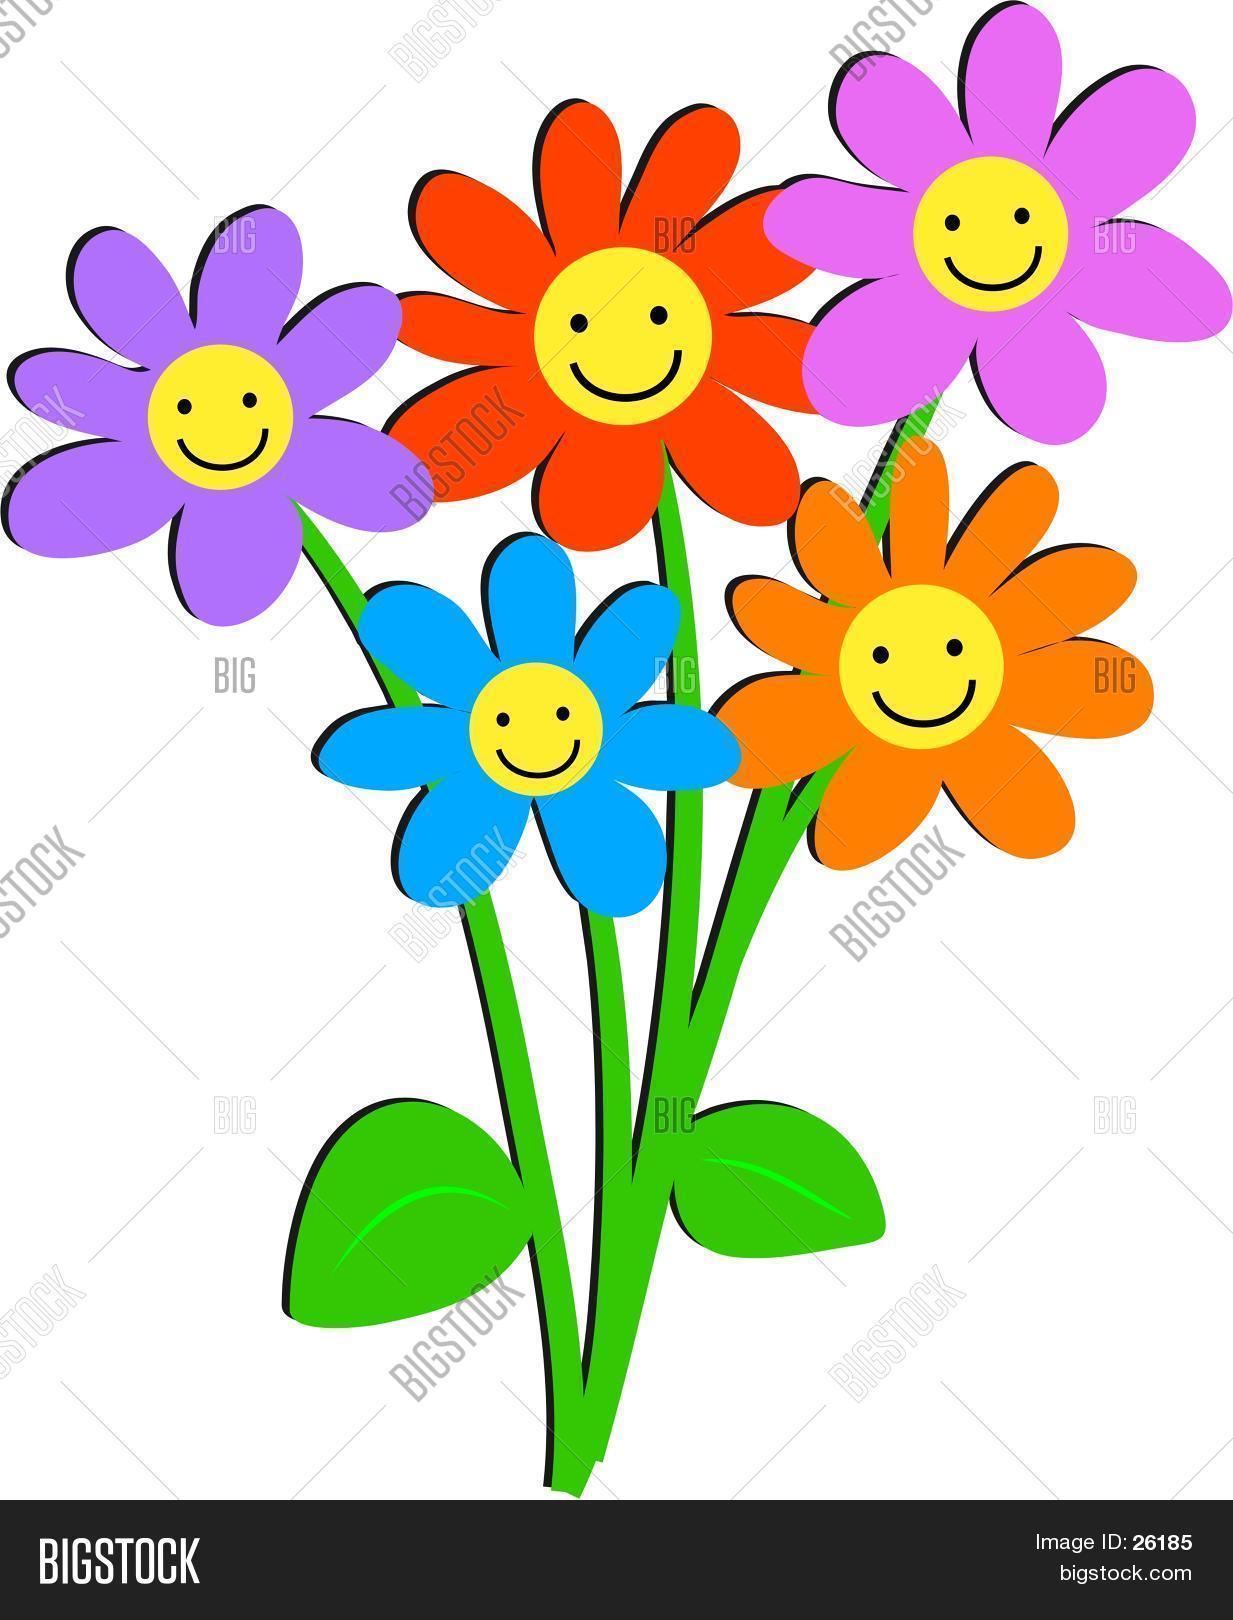 Happy Flowers Image & Photo | Bigstock